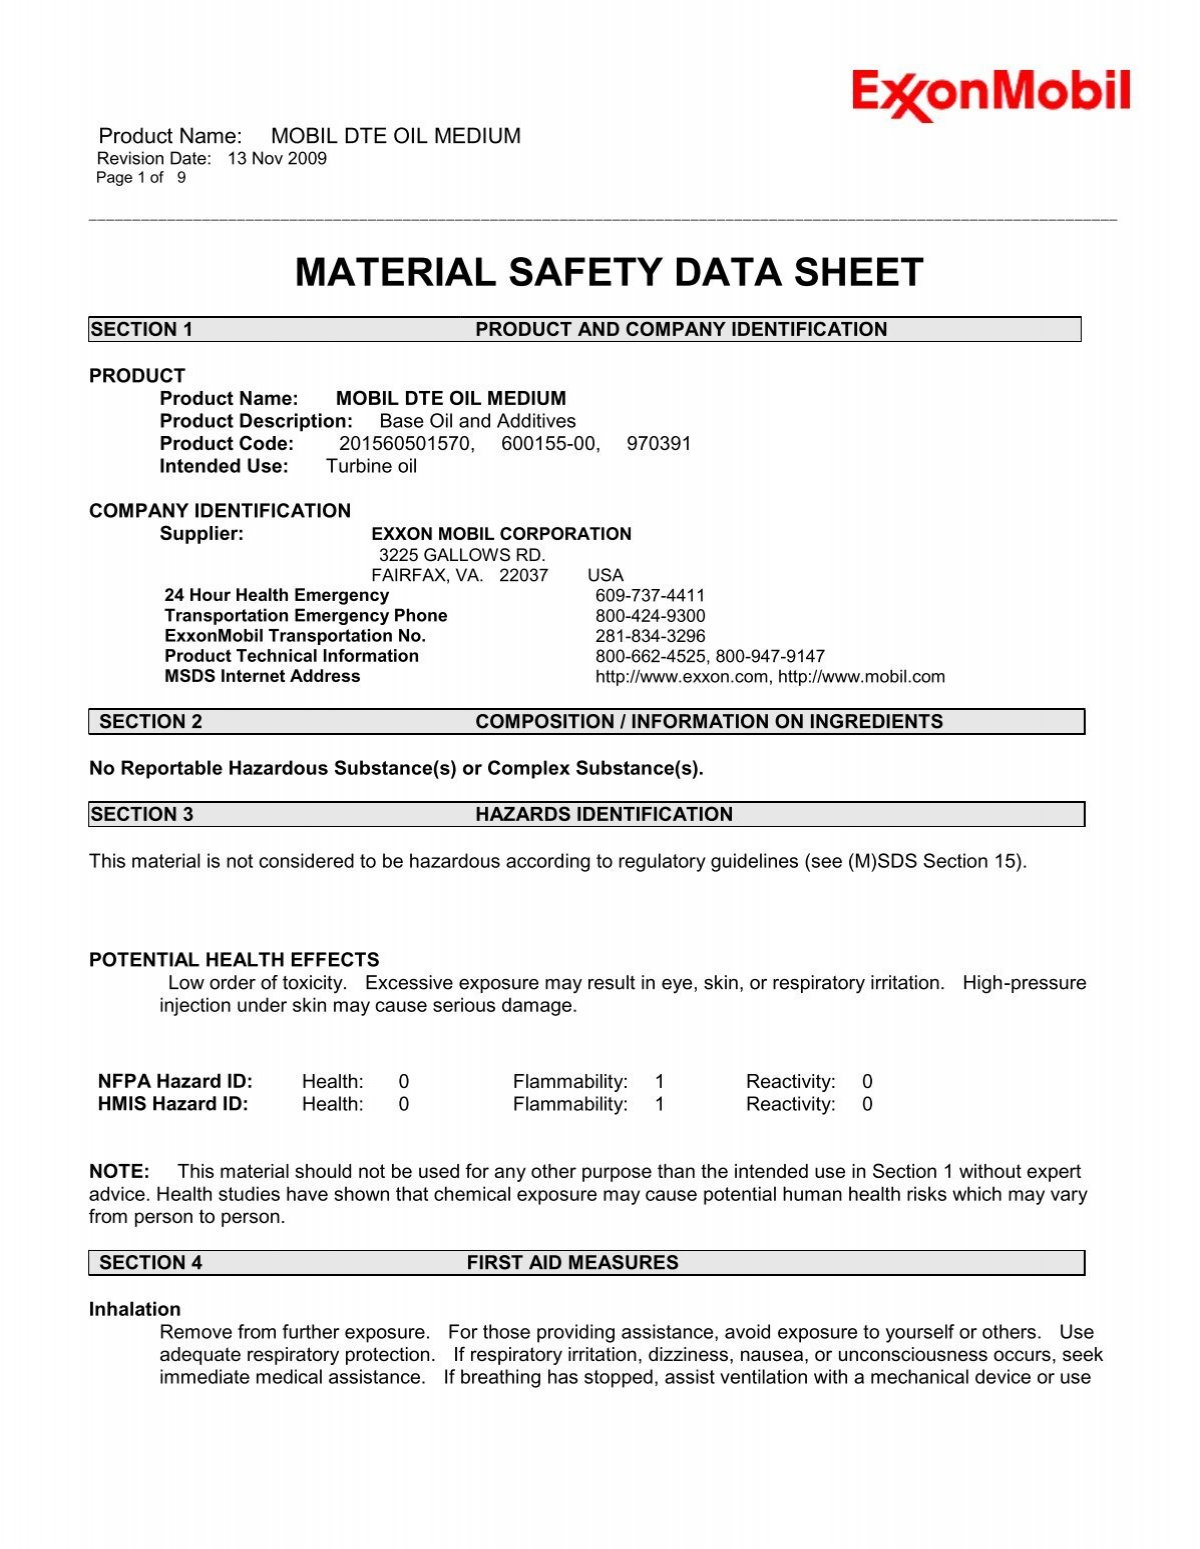 Lemsolv Safety Data Sheet Material Safety Data Sheet Msds Hot Sex Picture